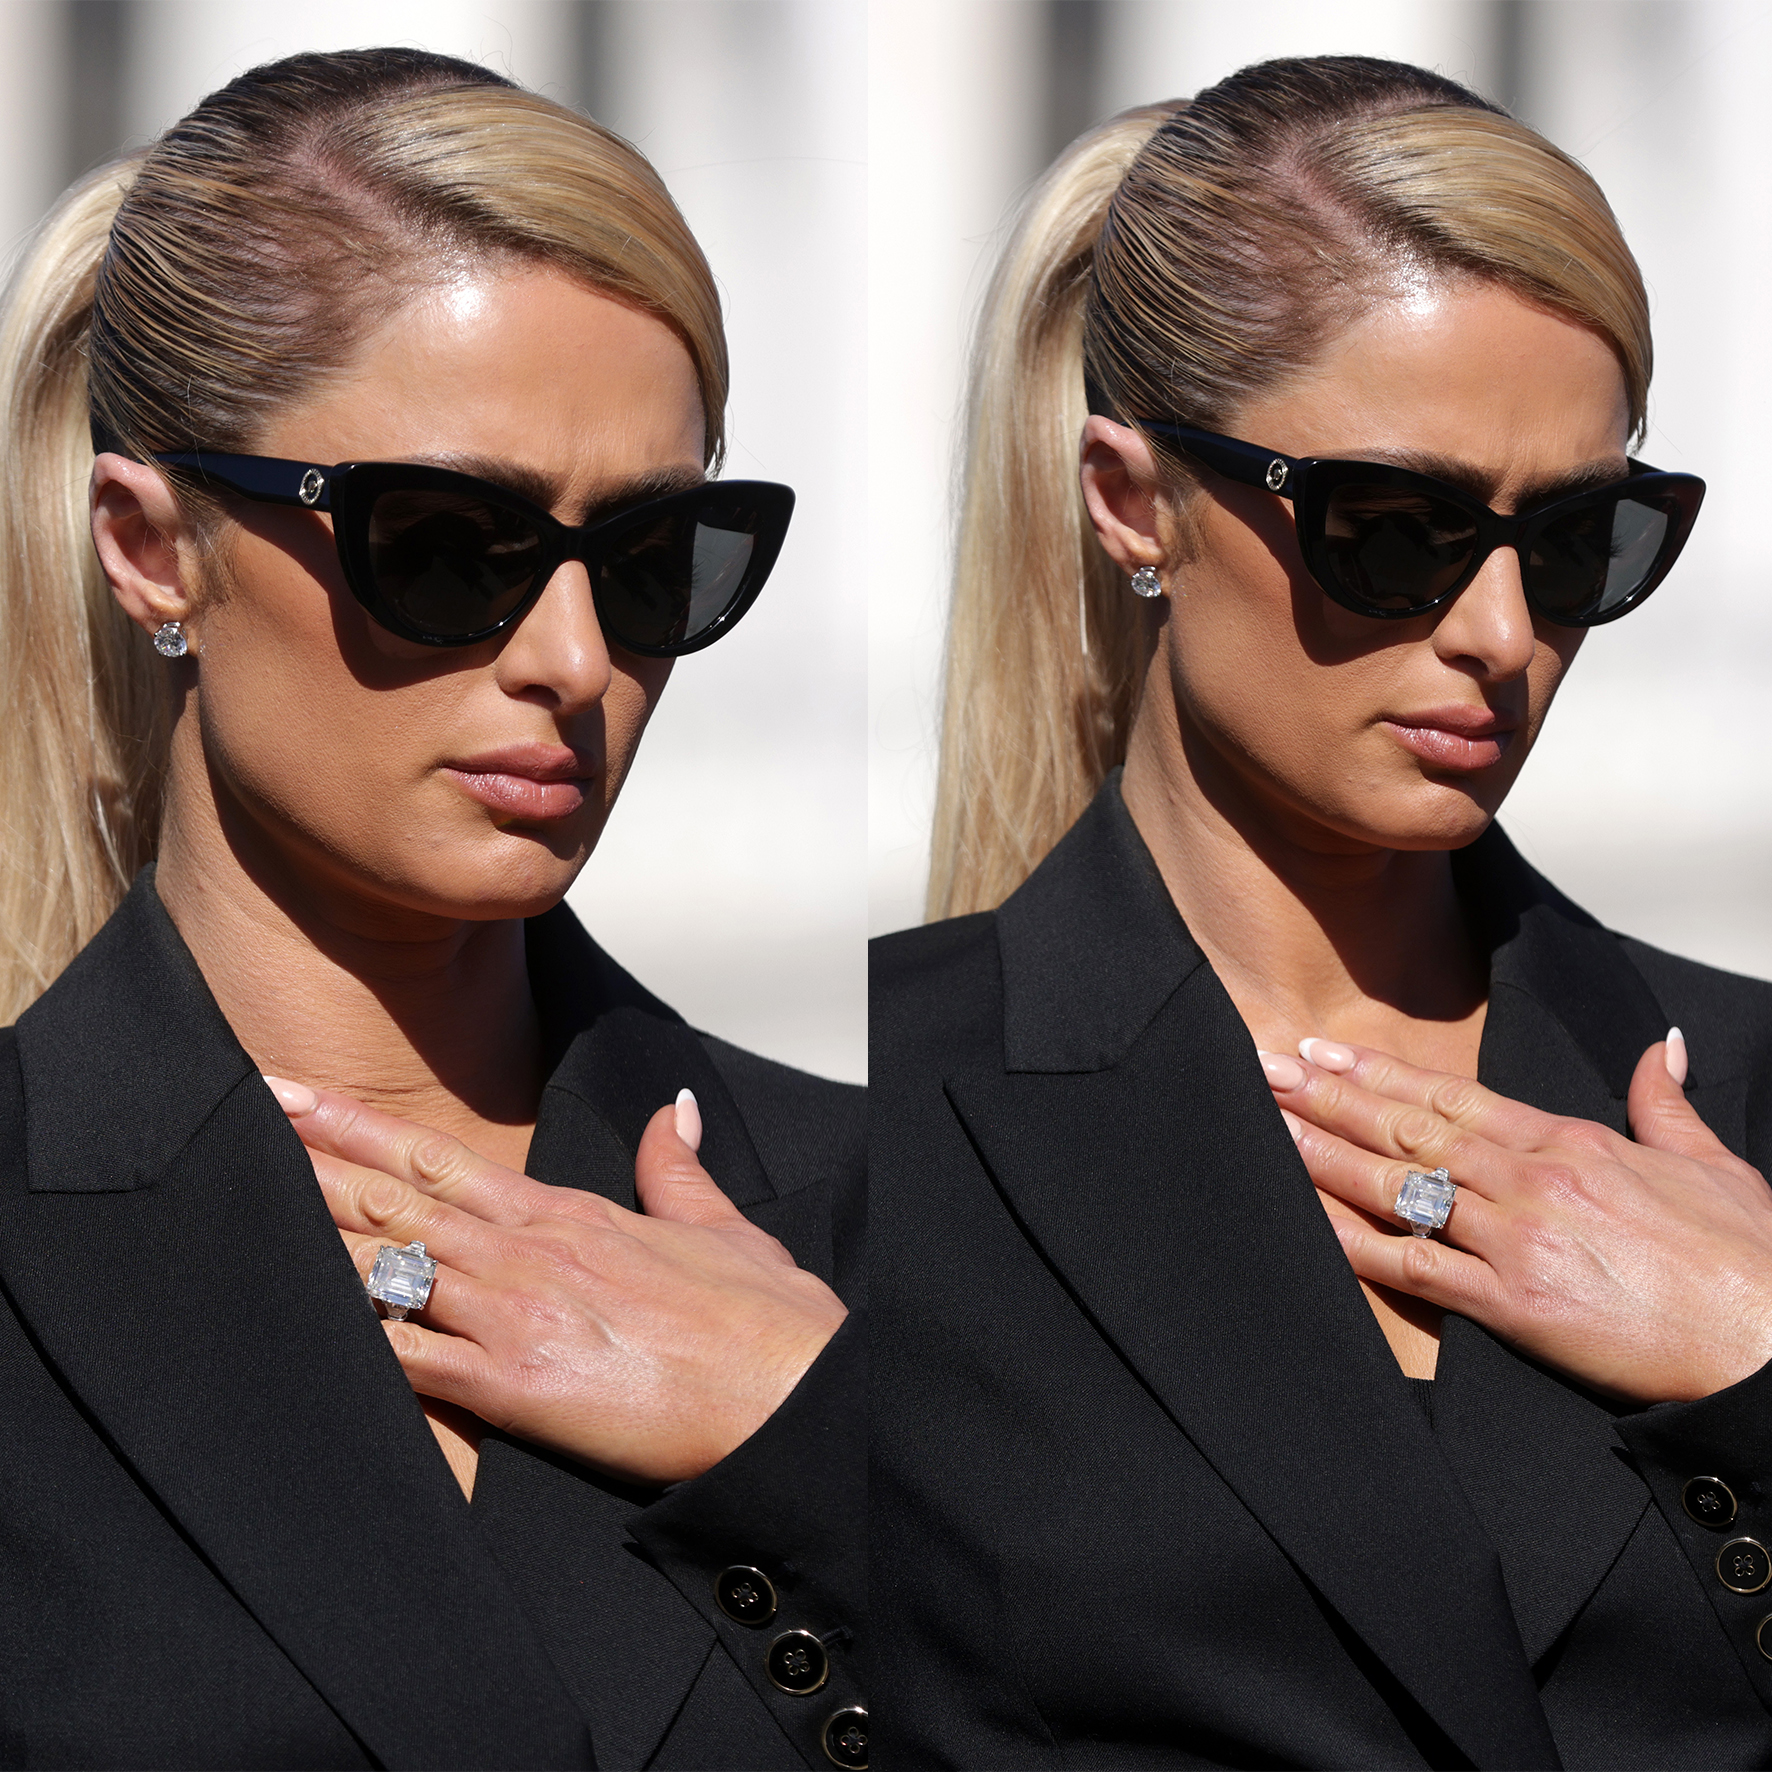 H Paris Hilton μίλησε για το χυδαίο βιασμό της σε οικοτροφείο-«άνδρες του προσωπικού μου έκαναν δήθεν γυναικολογική εξέταση»